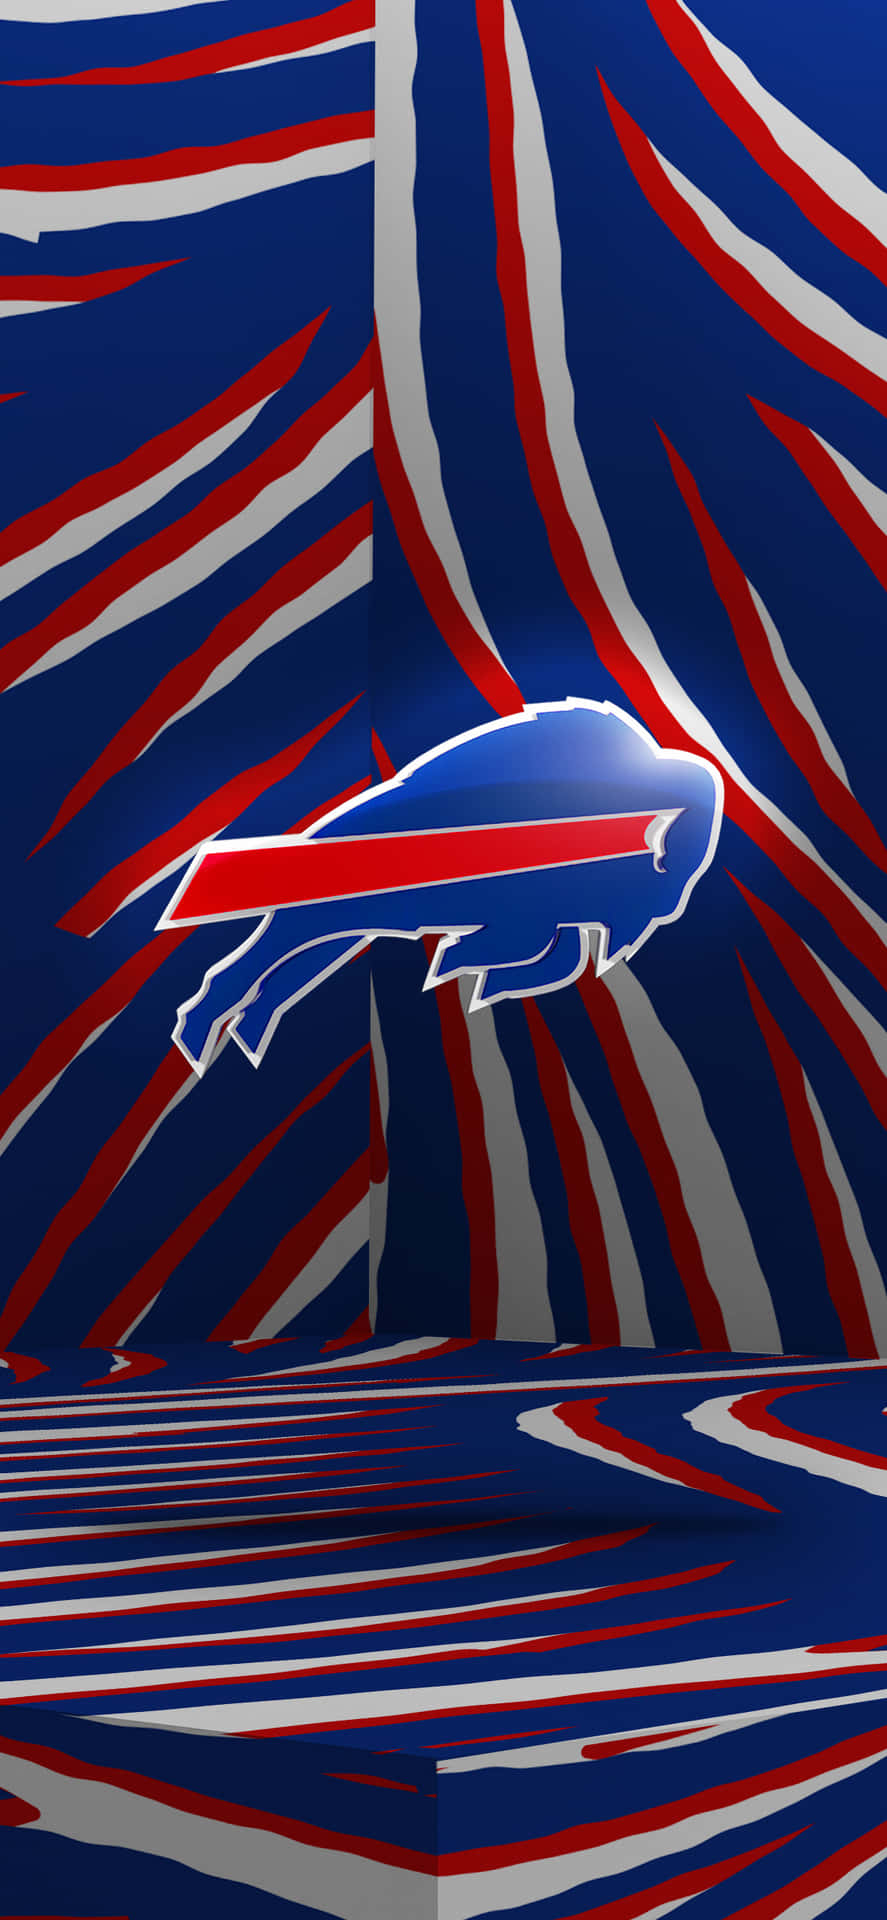 Cheer on the Buffalo Bills at Home!